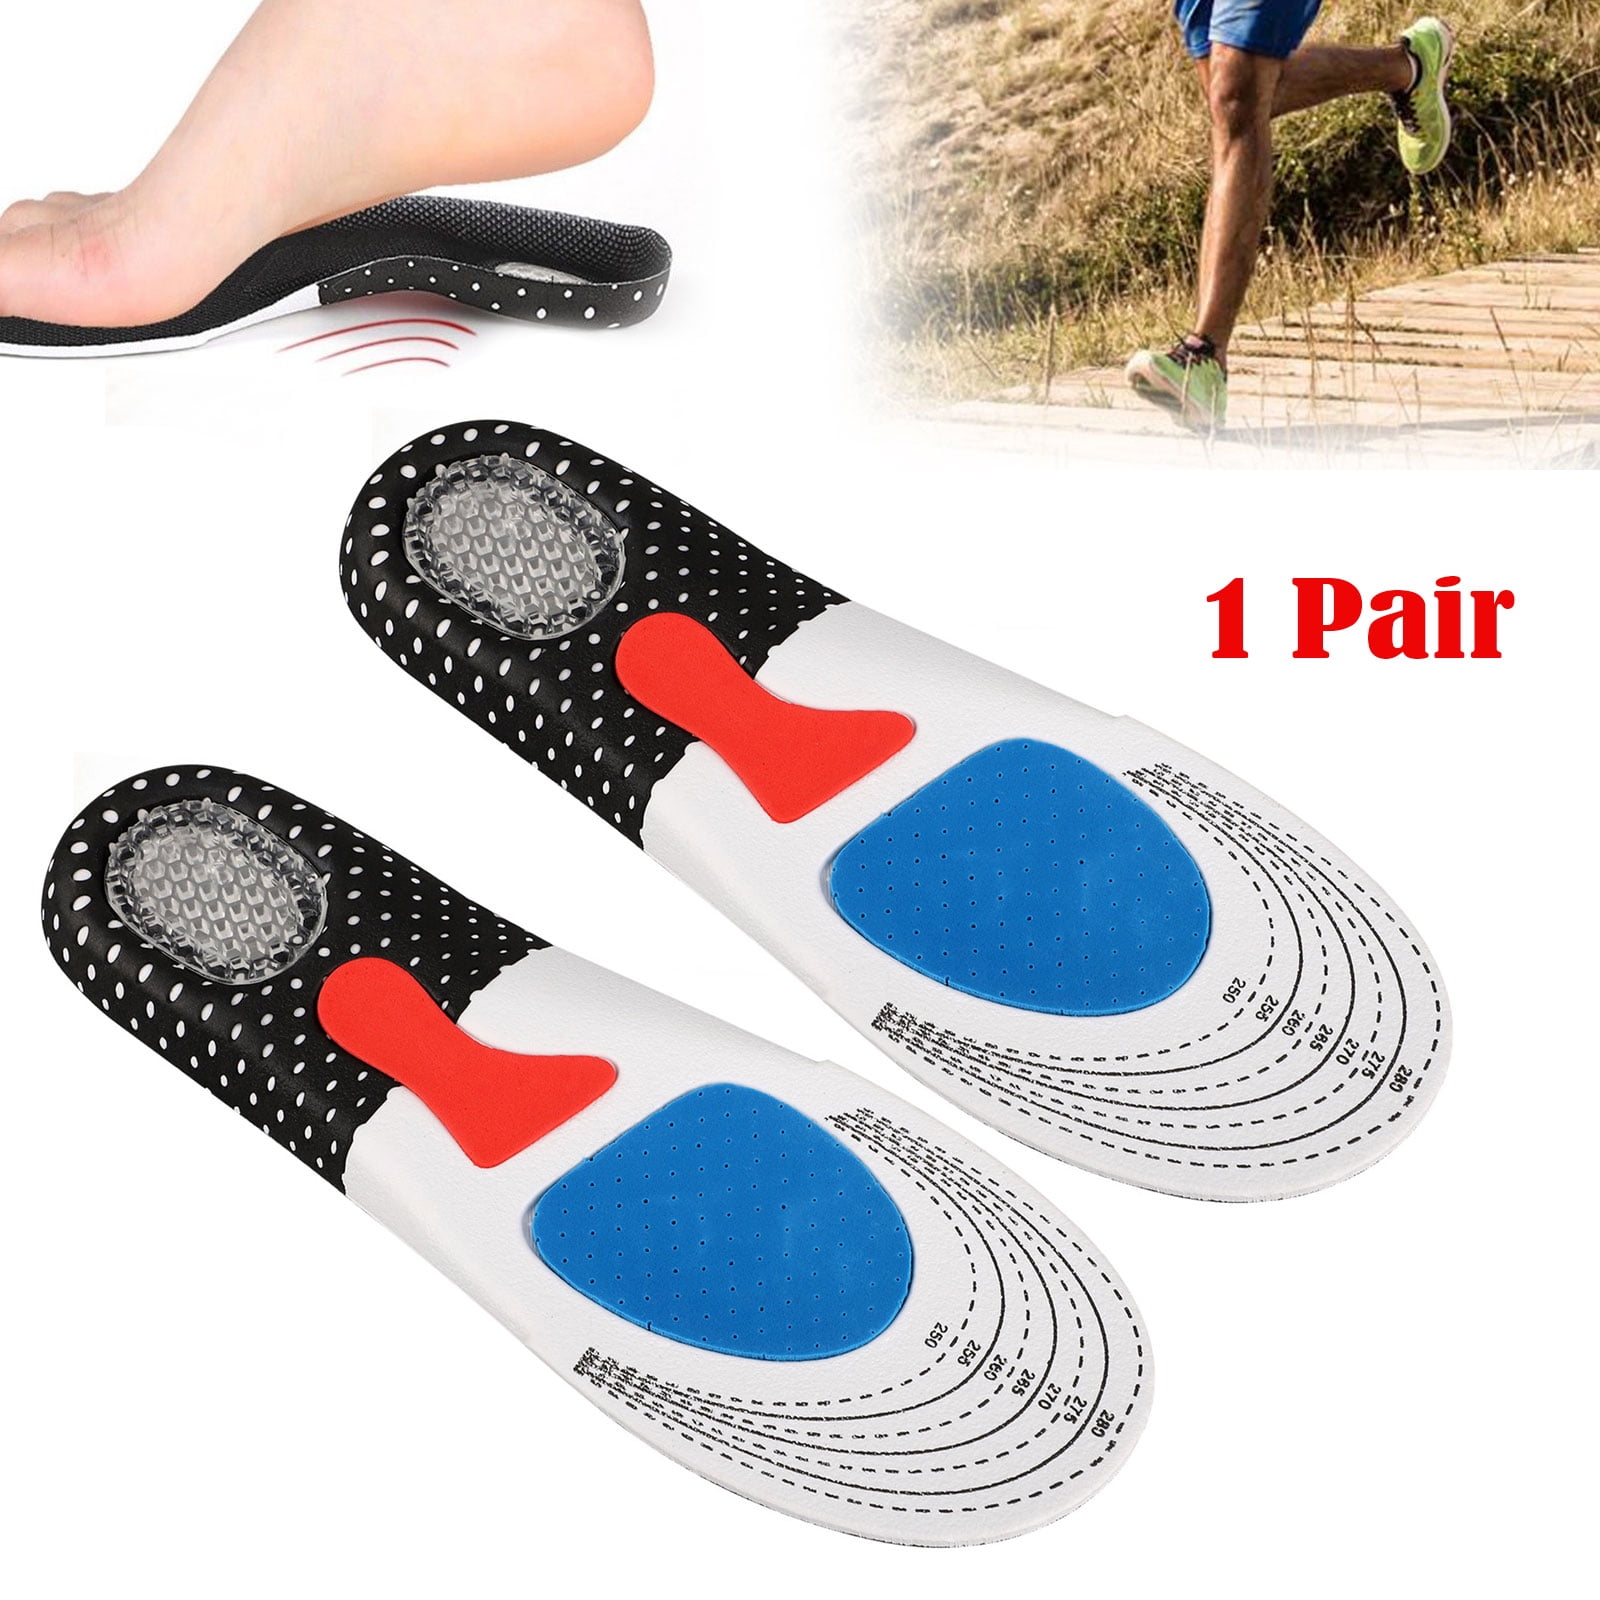 3/4 Length Feet Pain Relief Metatarsal Cushion Heel Shock Absorption Insoles